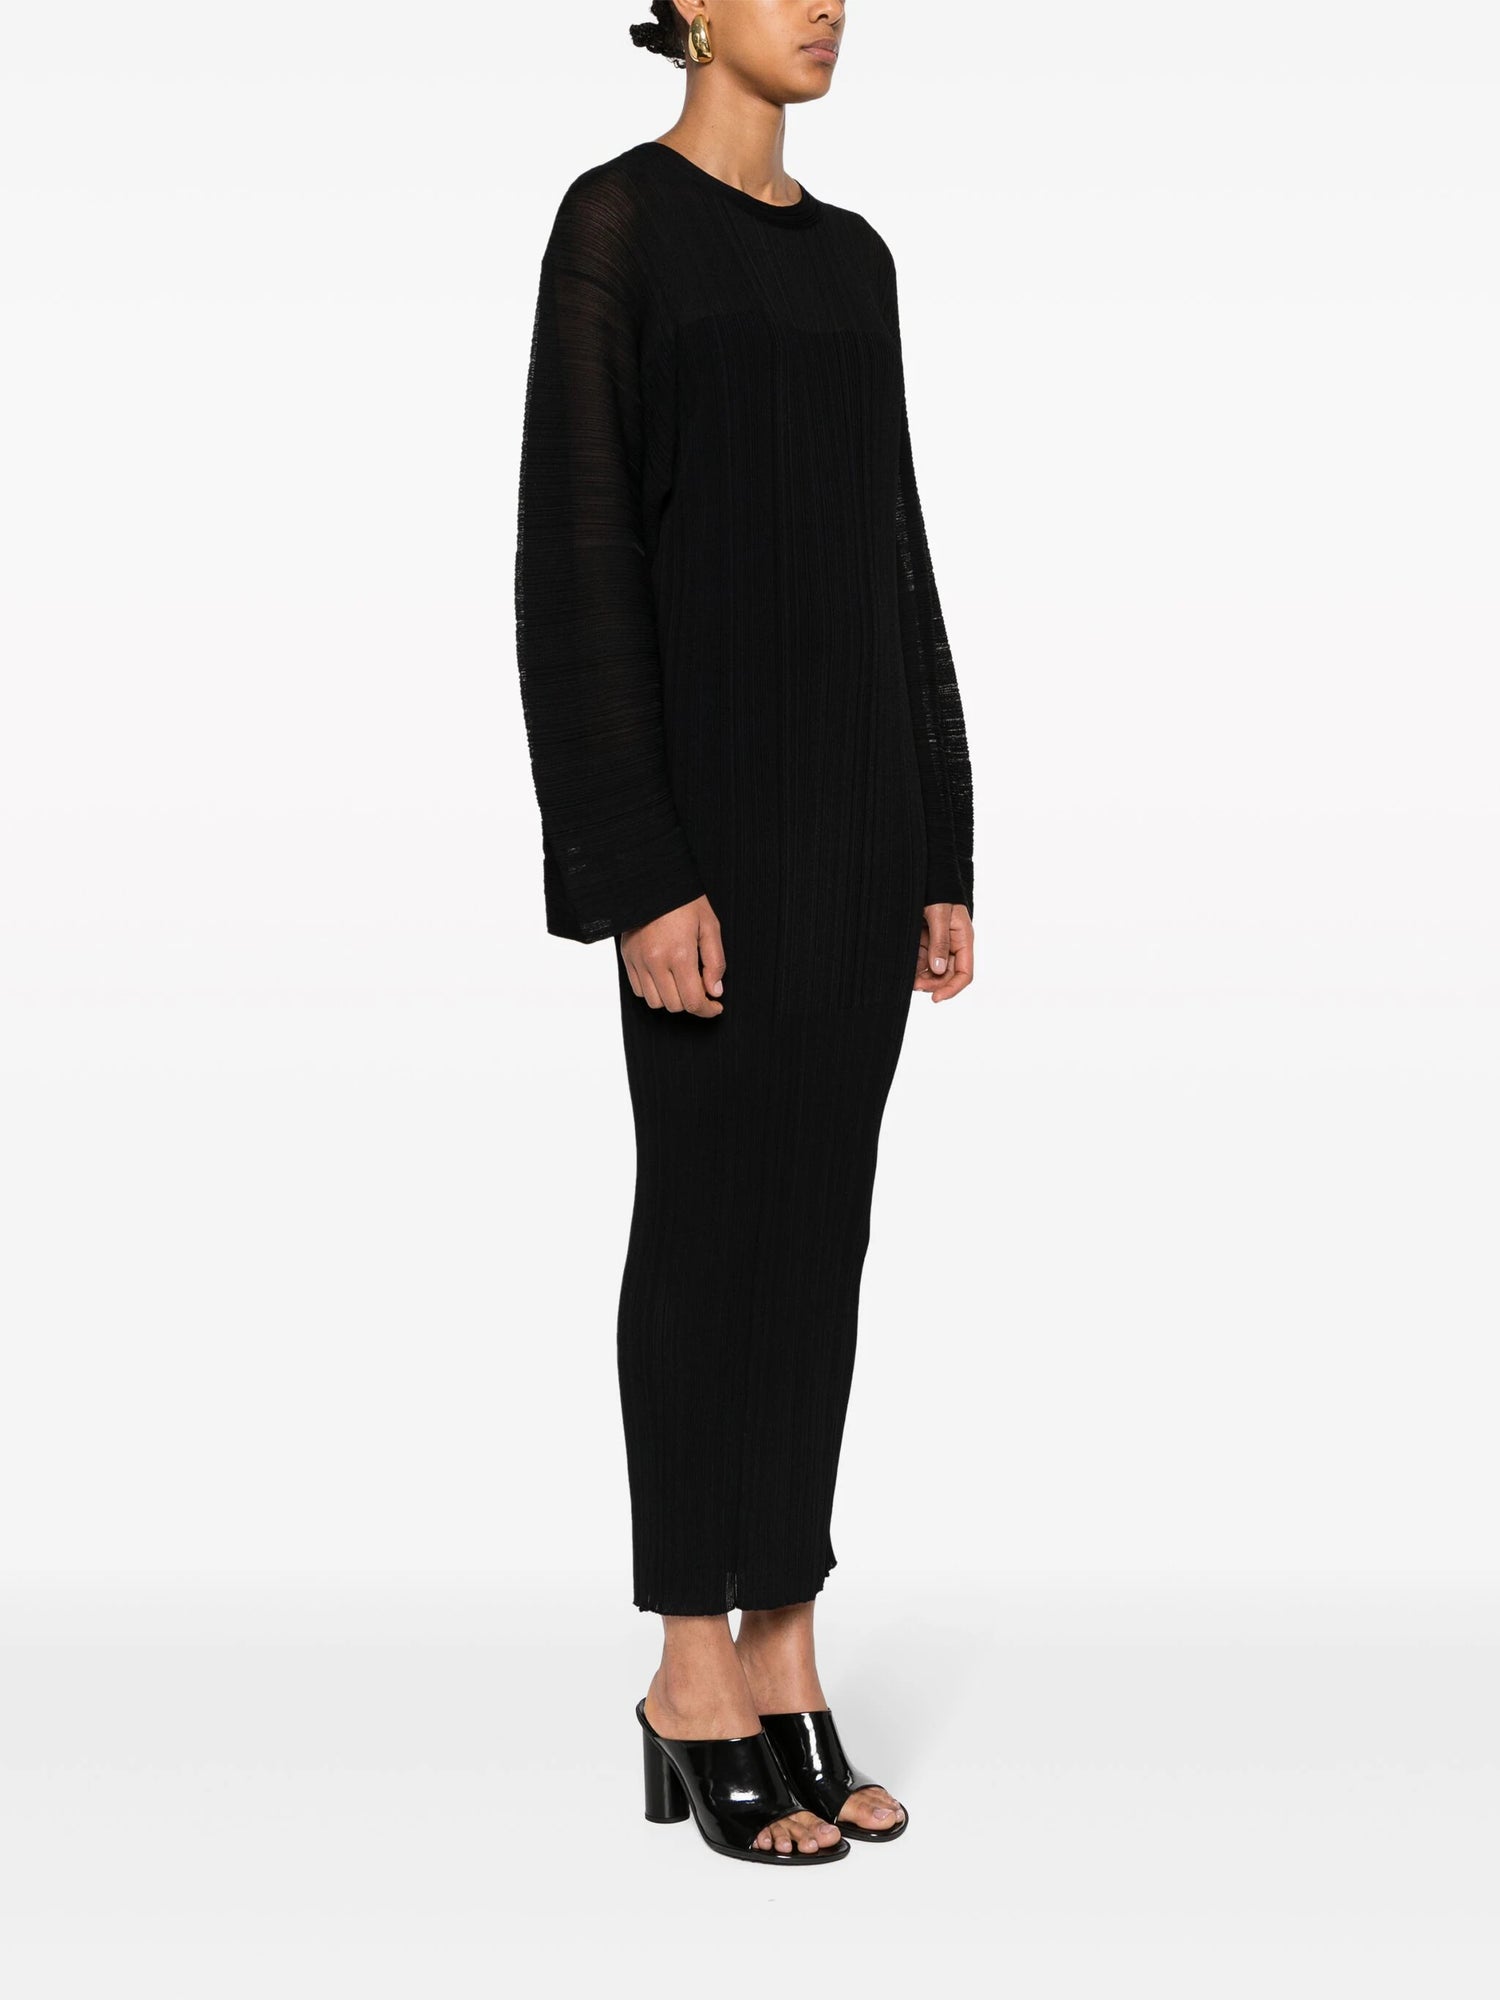 Lightweight Plisse' Knit Dress, black